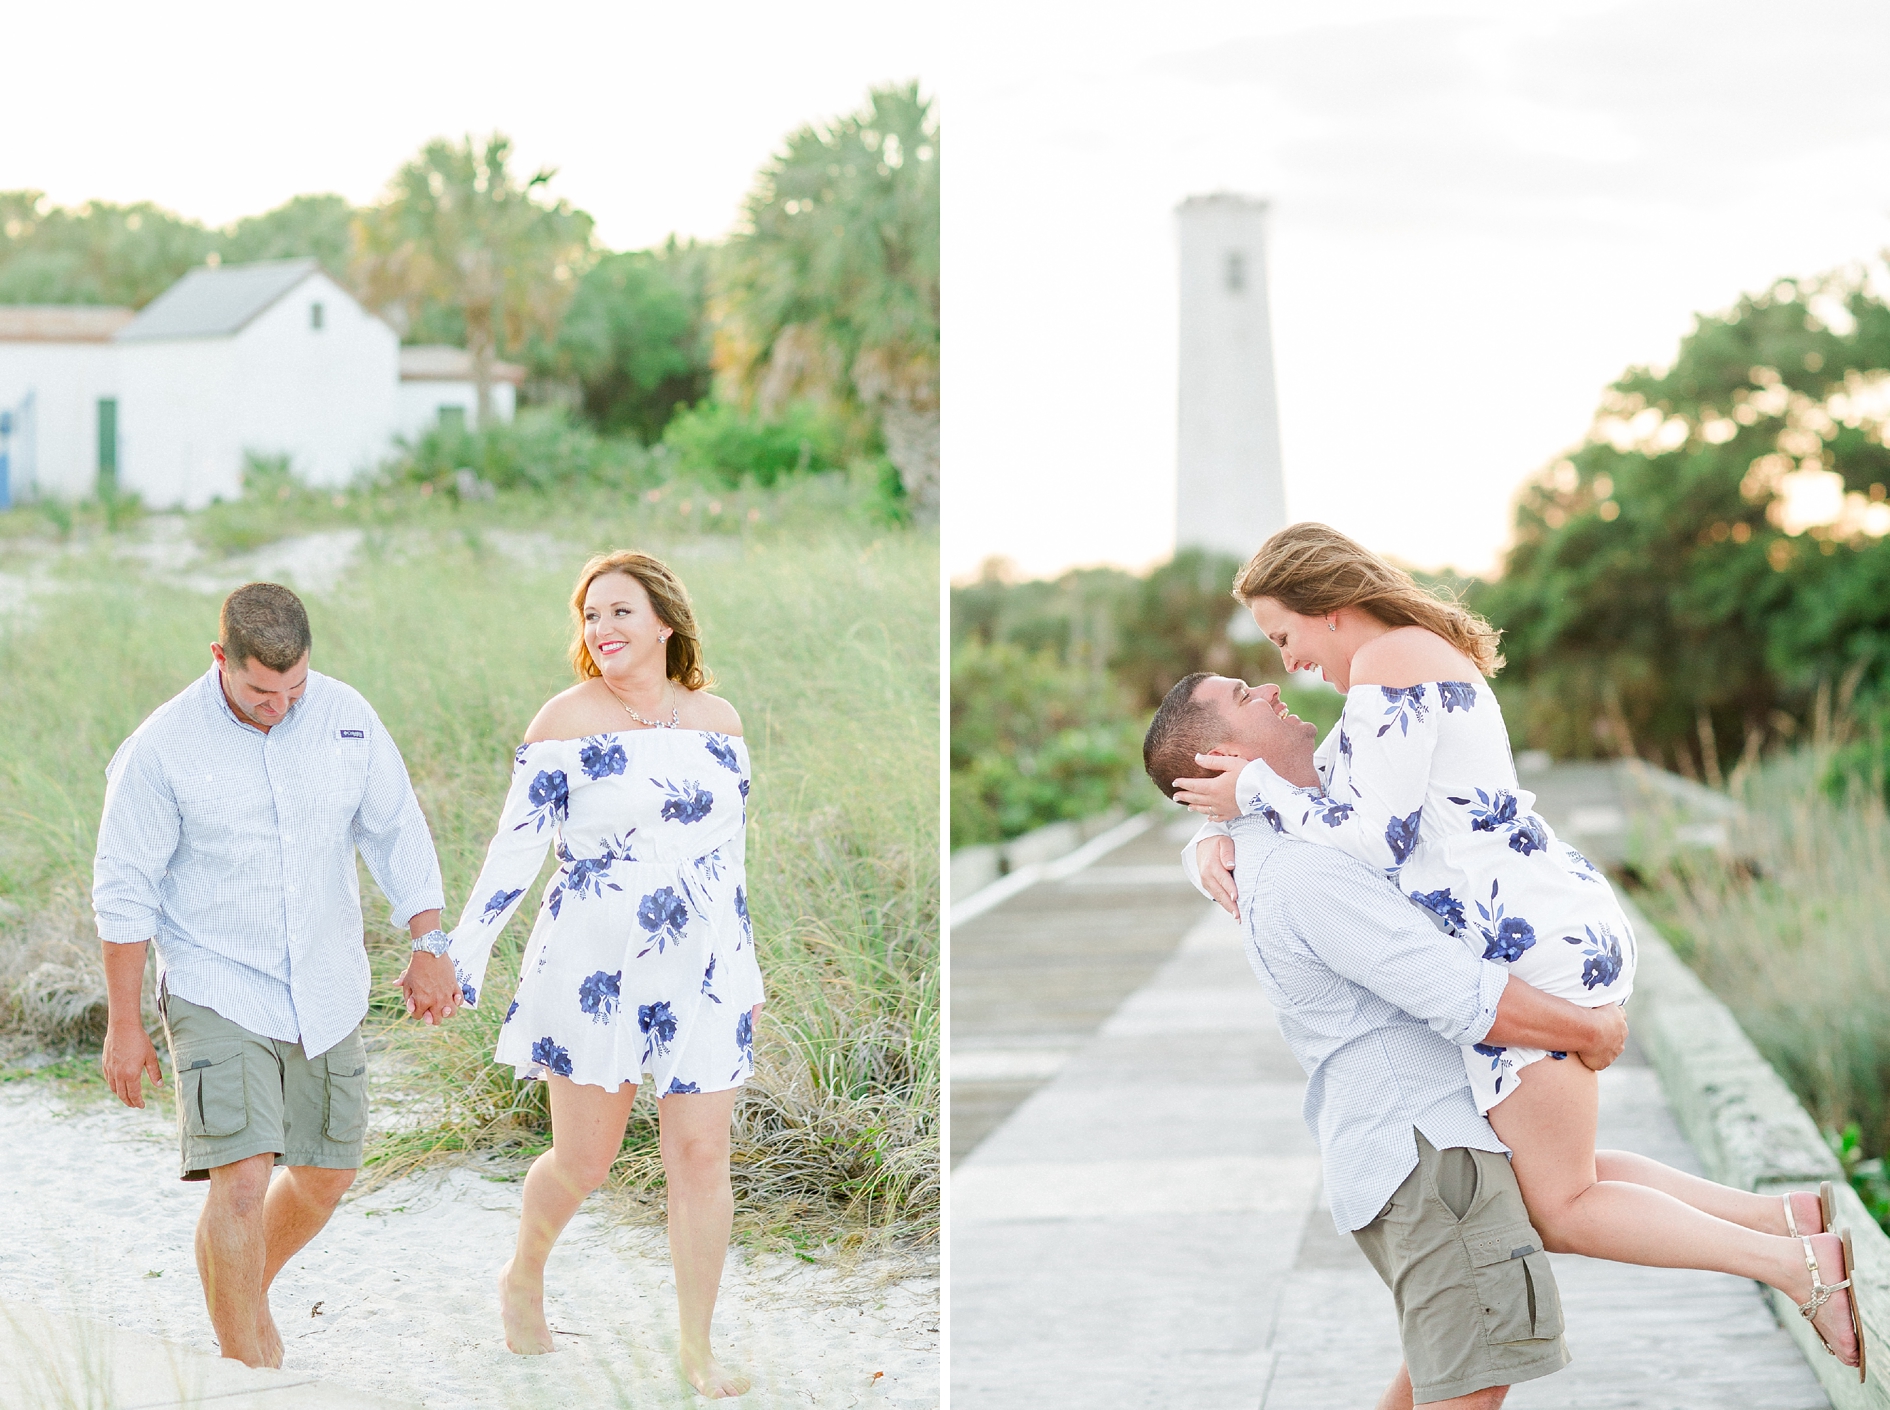 Ft. Desoto Engagement | Christina and James, Florida | © Ailyn La Torre Photography 2017